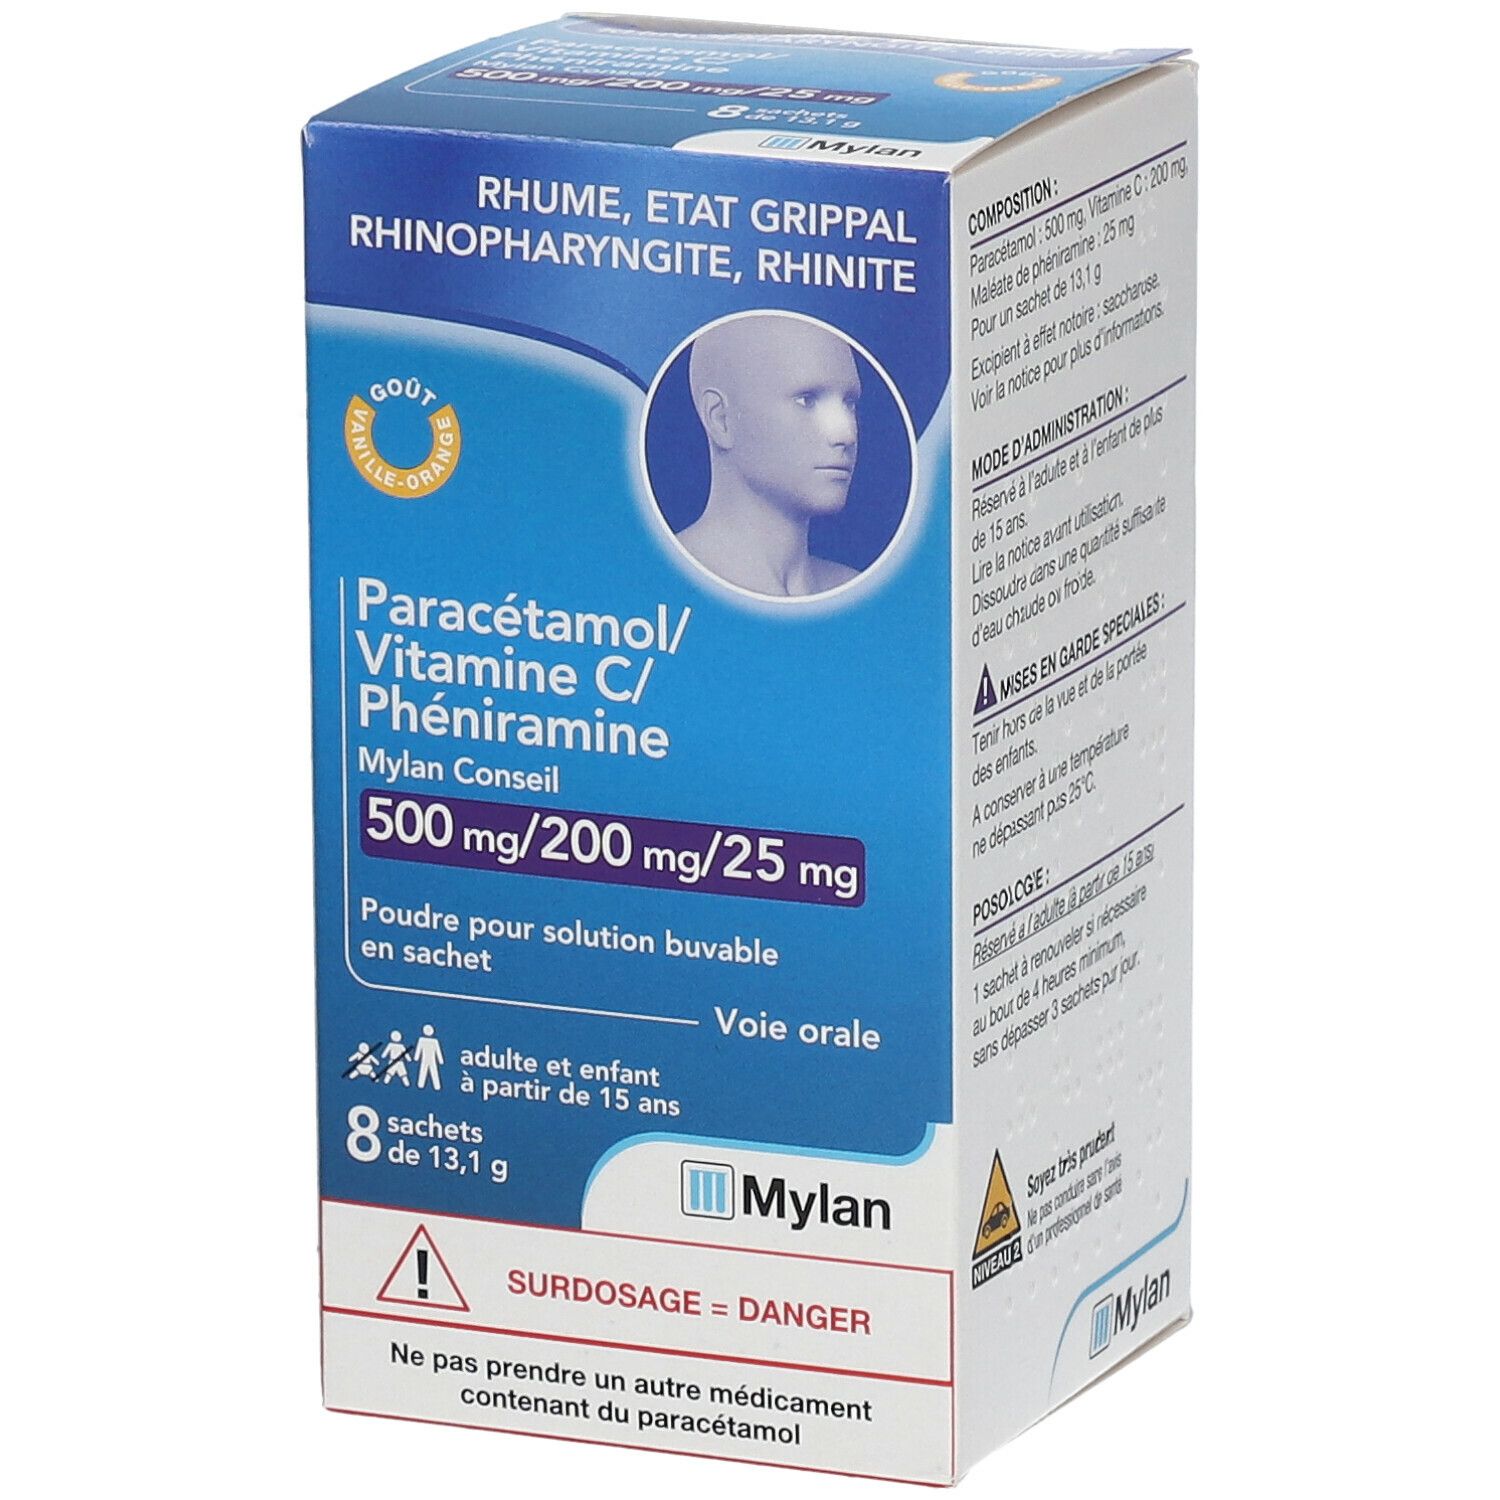 Paracétamol/ Vitamine C/ Phéniramine Mylan Conseil 500 mg/200 mg/25 mg